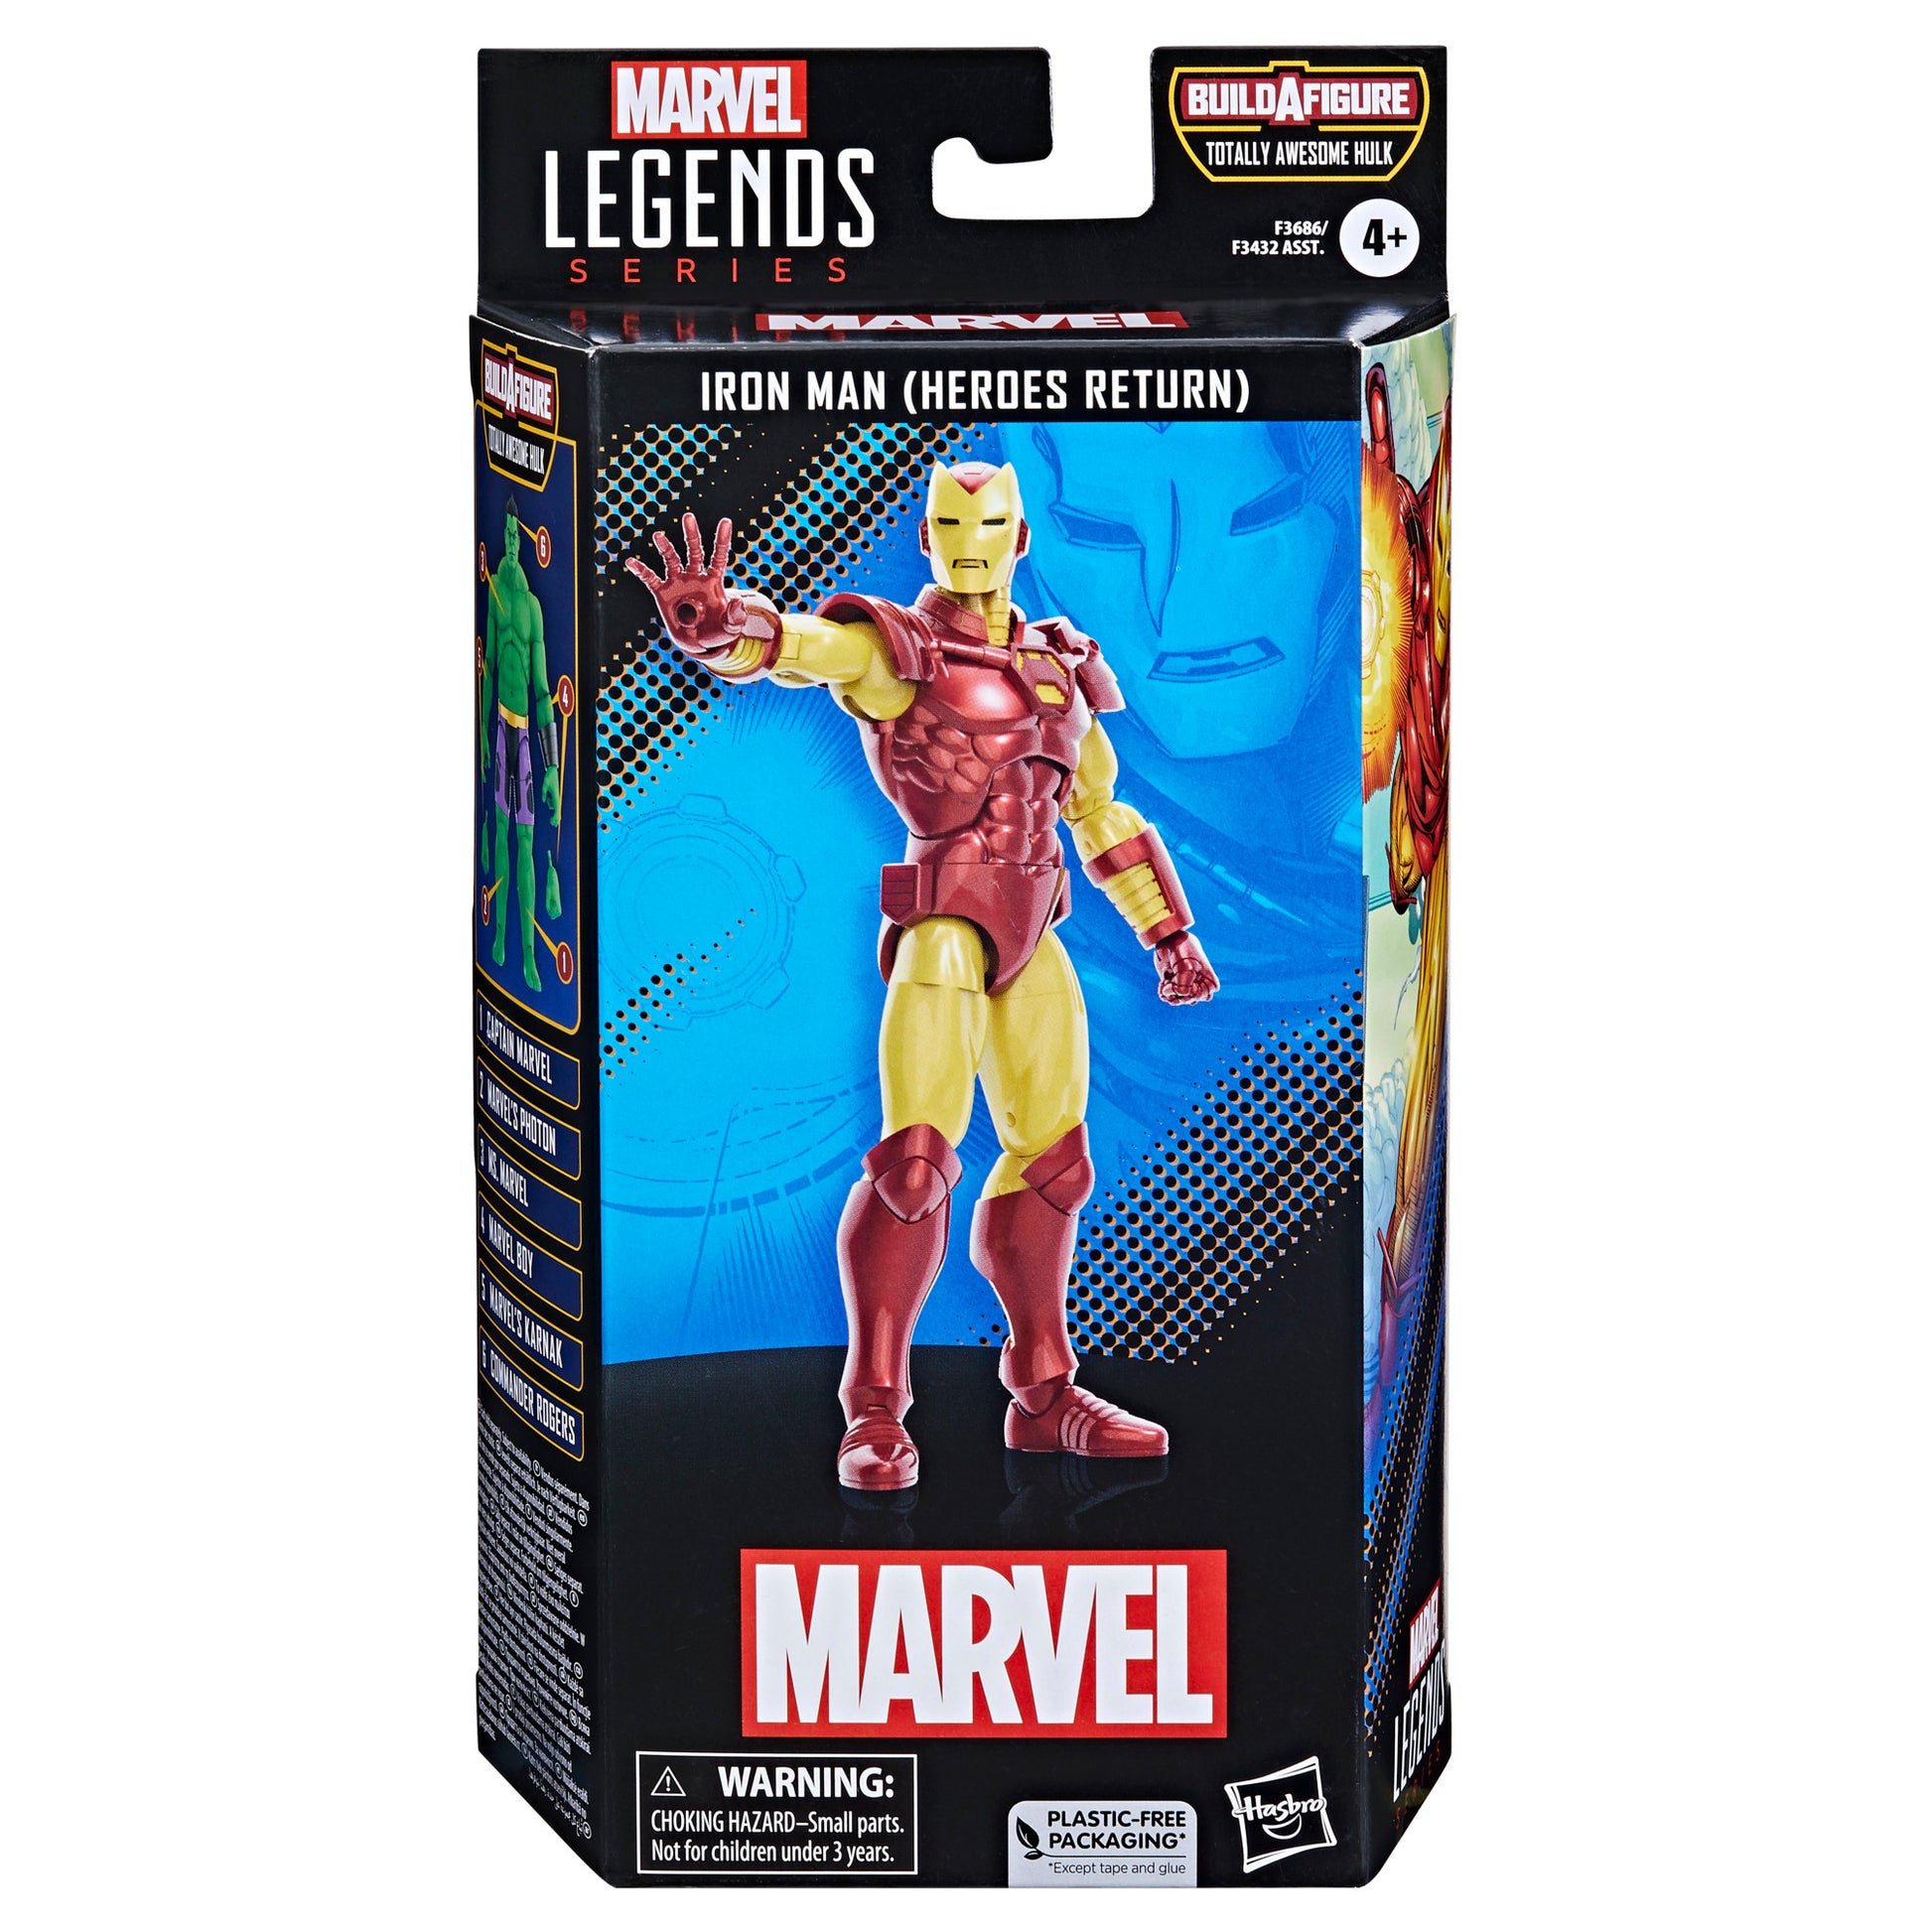 Iron Man Heroes Return in a box - Heretoserveyou